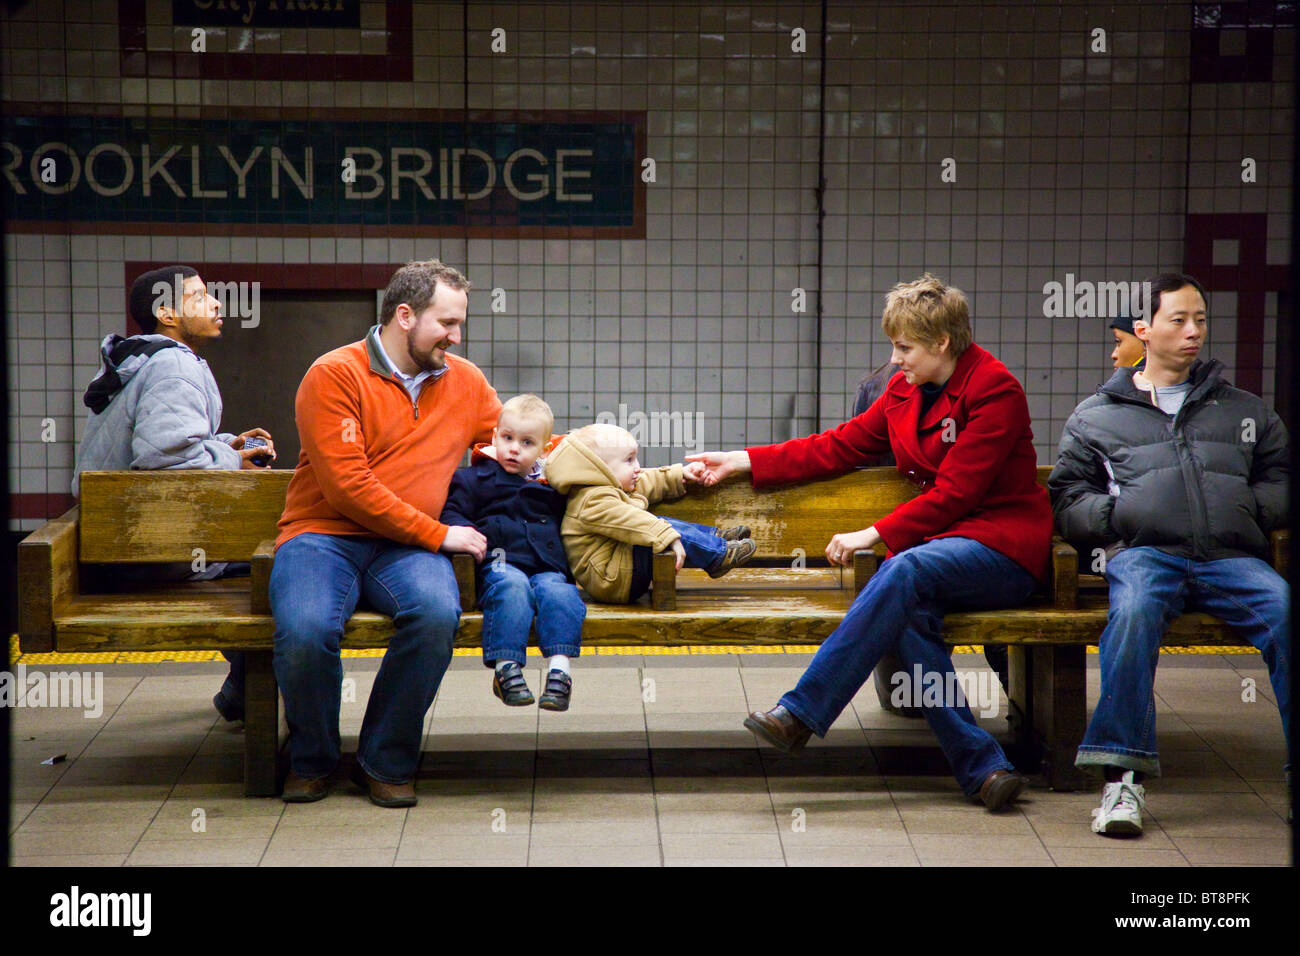 Familie warten an der Brooklyn Bridge u-Bahnstation, Manhattan, New York Stockfoto